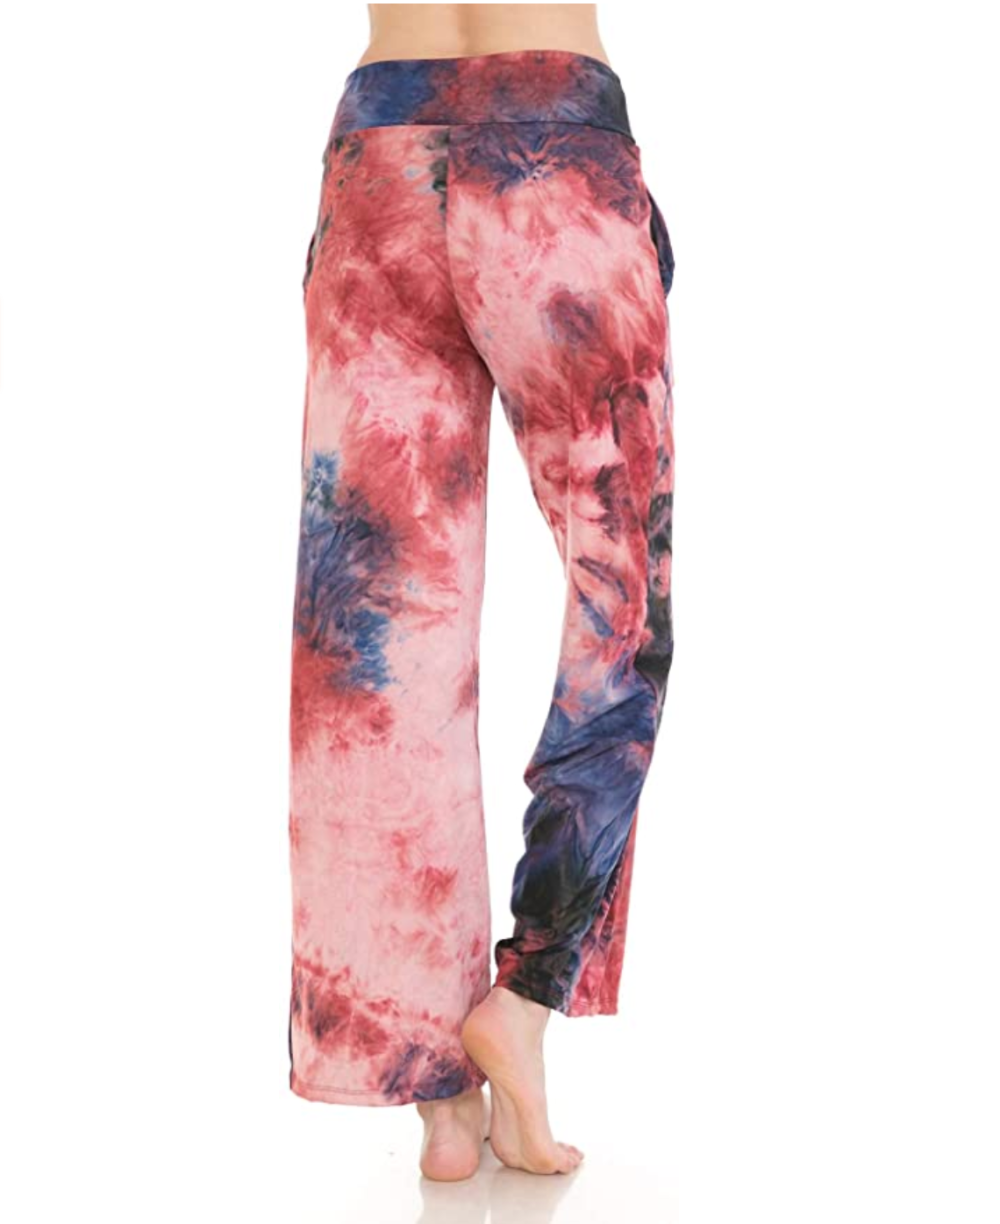 Leggings Depot Women's Popular Comfortable Casual Solid and Print Pajama Lounge Pants